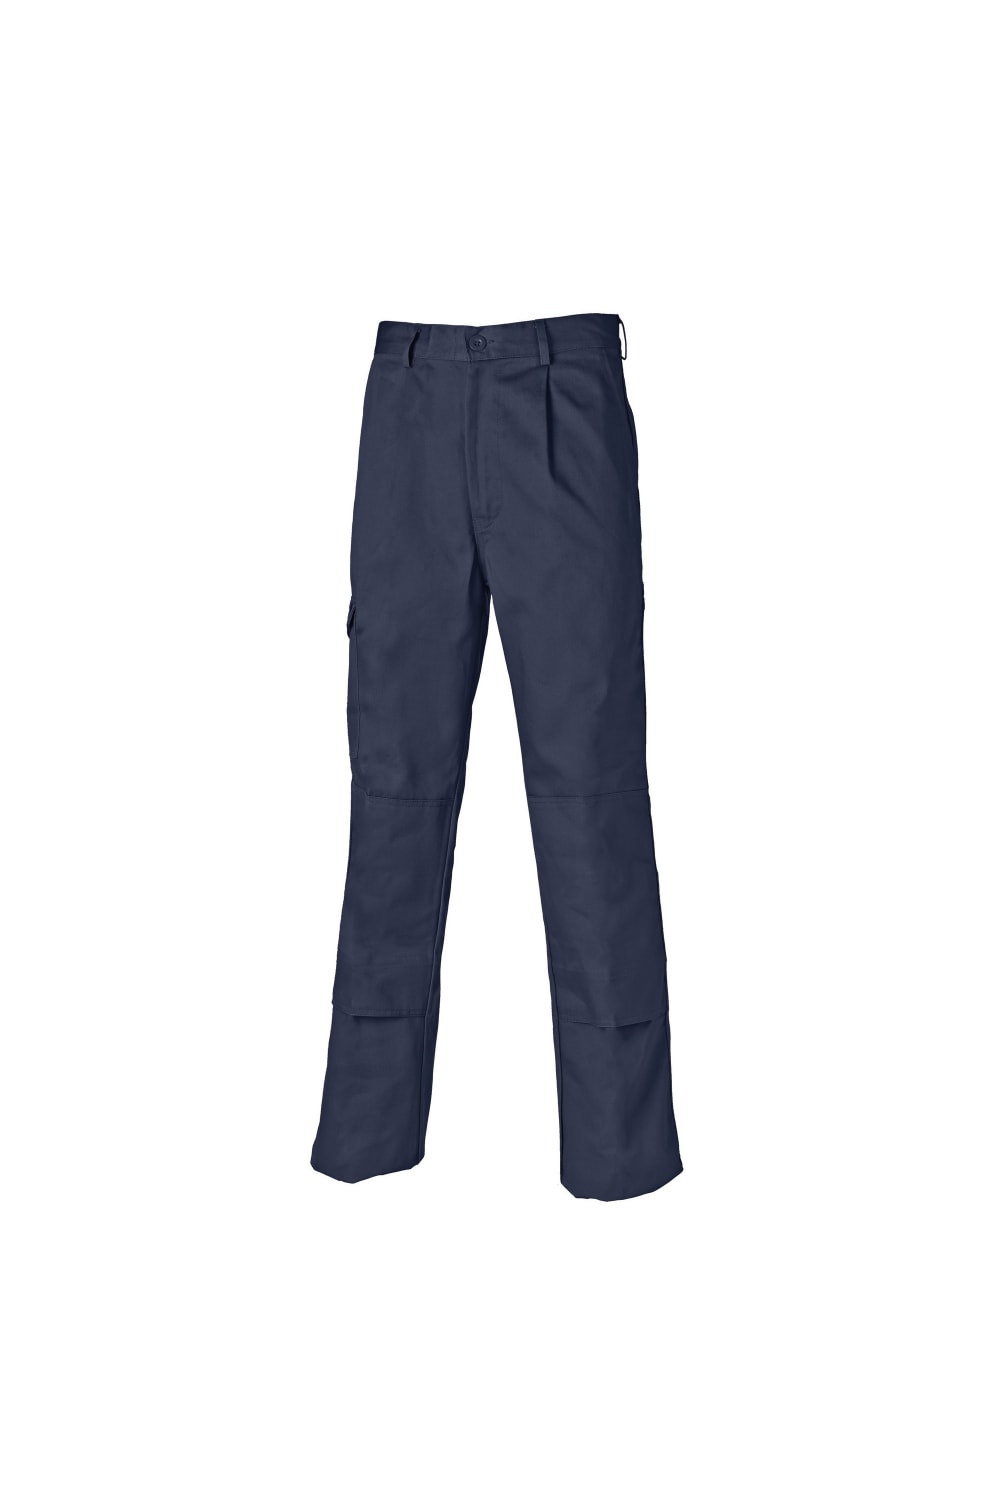 Dickies Mens Super Work Trousers (Short Leg) (Navy Blue)